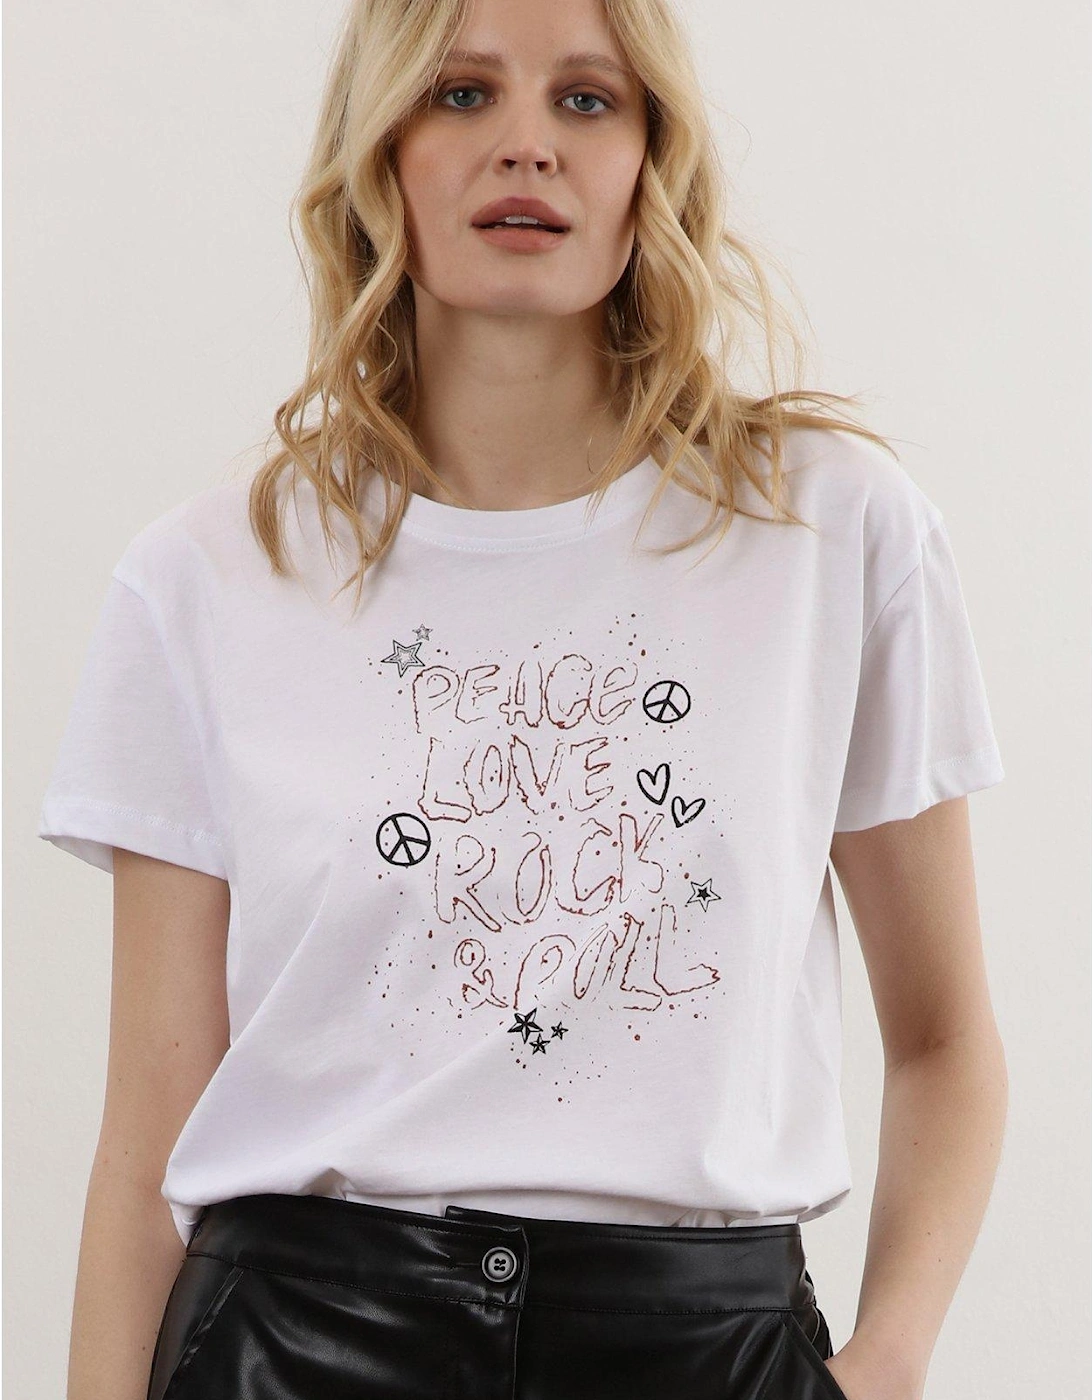 Peace Love Rock N' Roll Slogan T-shirt - White